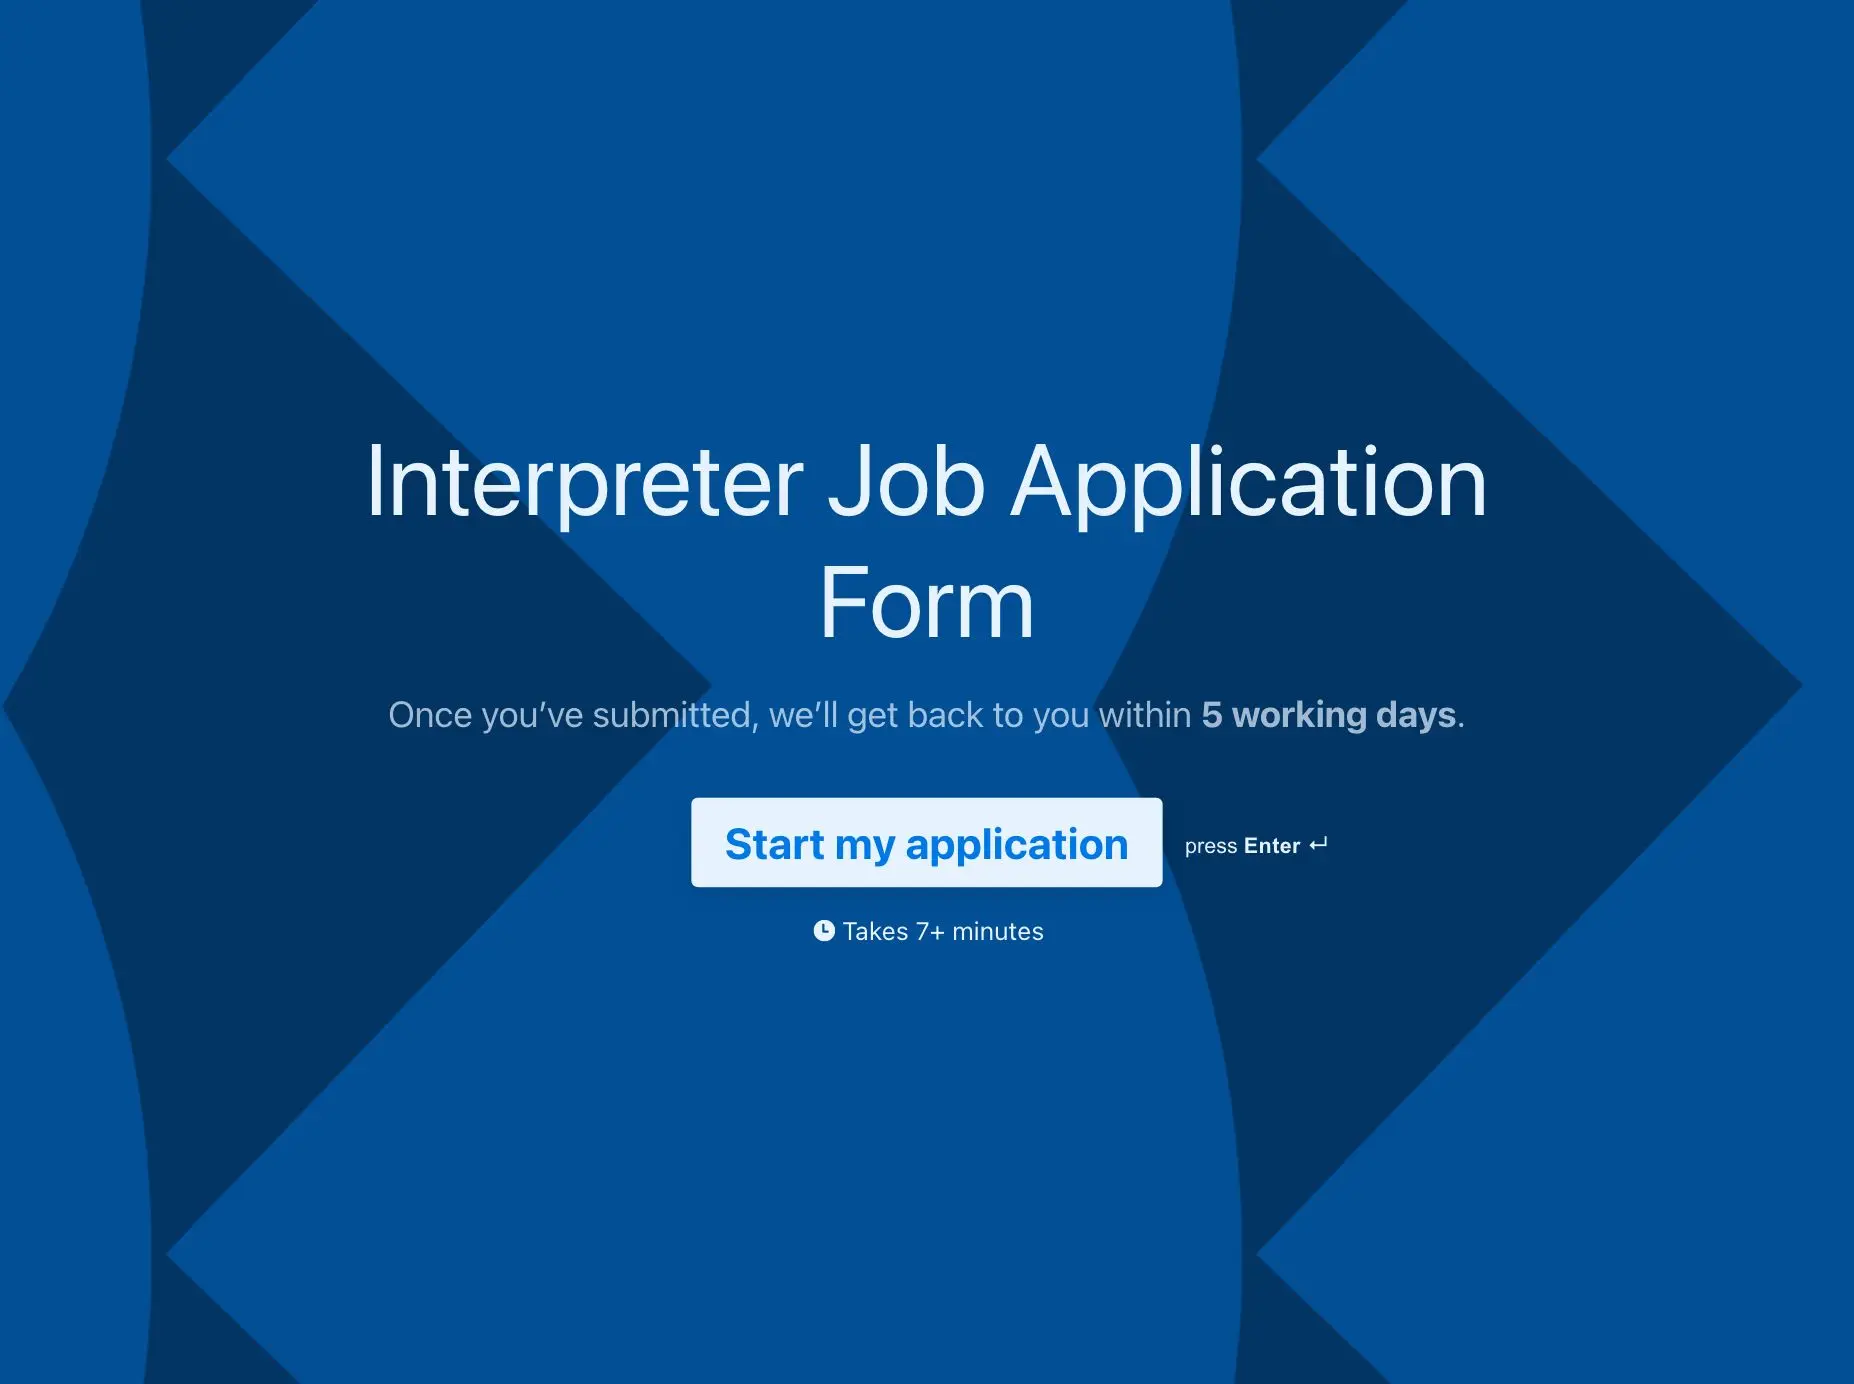 Interpreter Job Application Form Template Hero